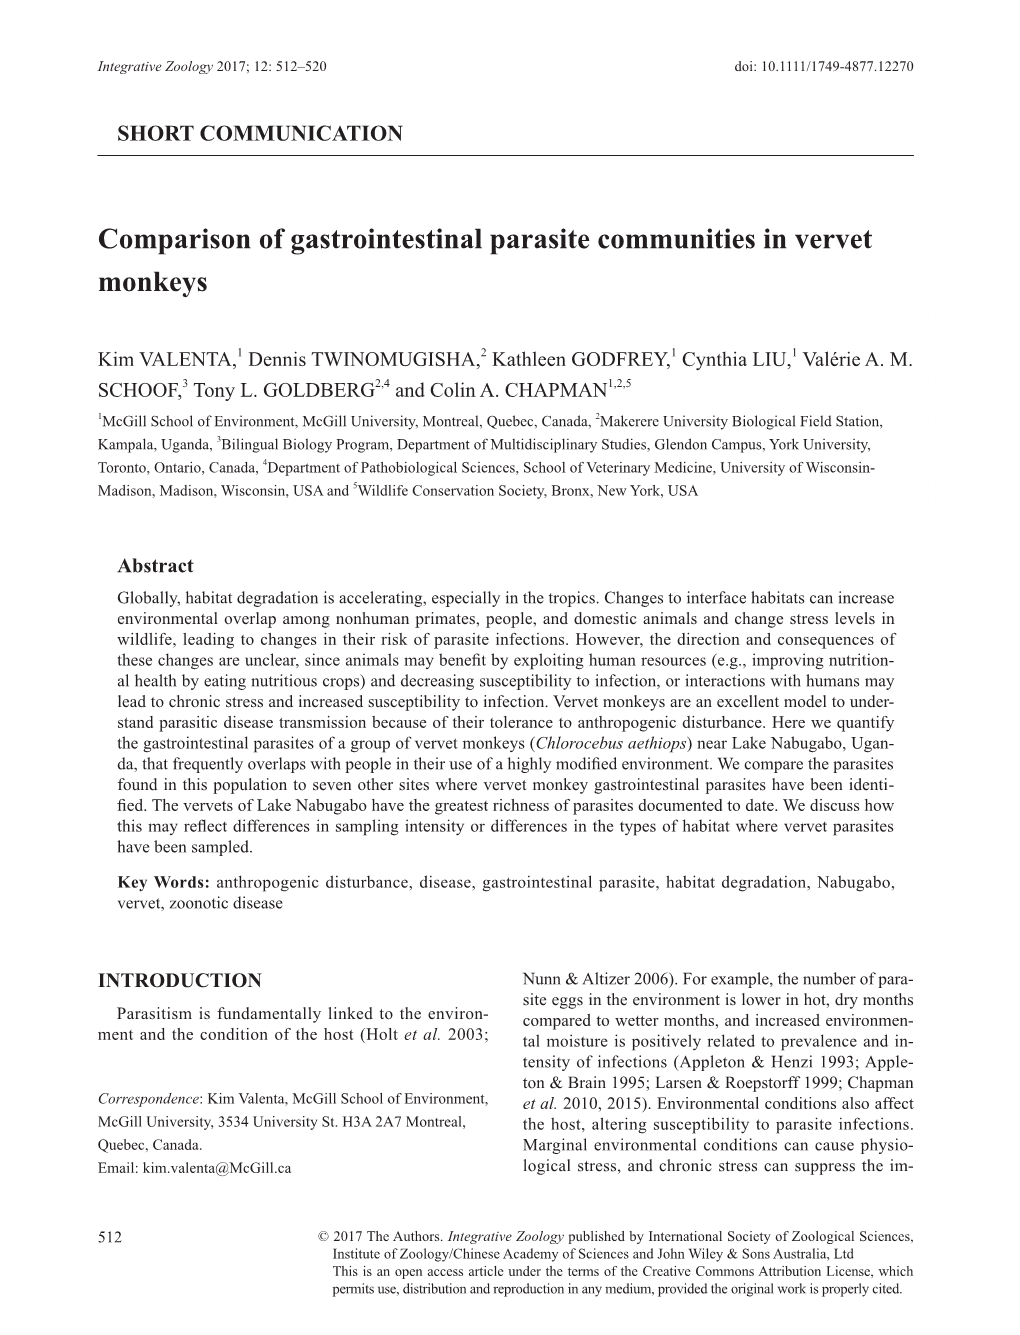 Comparison of Gastrointestinal Parasite Communities in Vervet